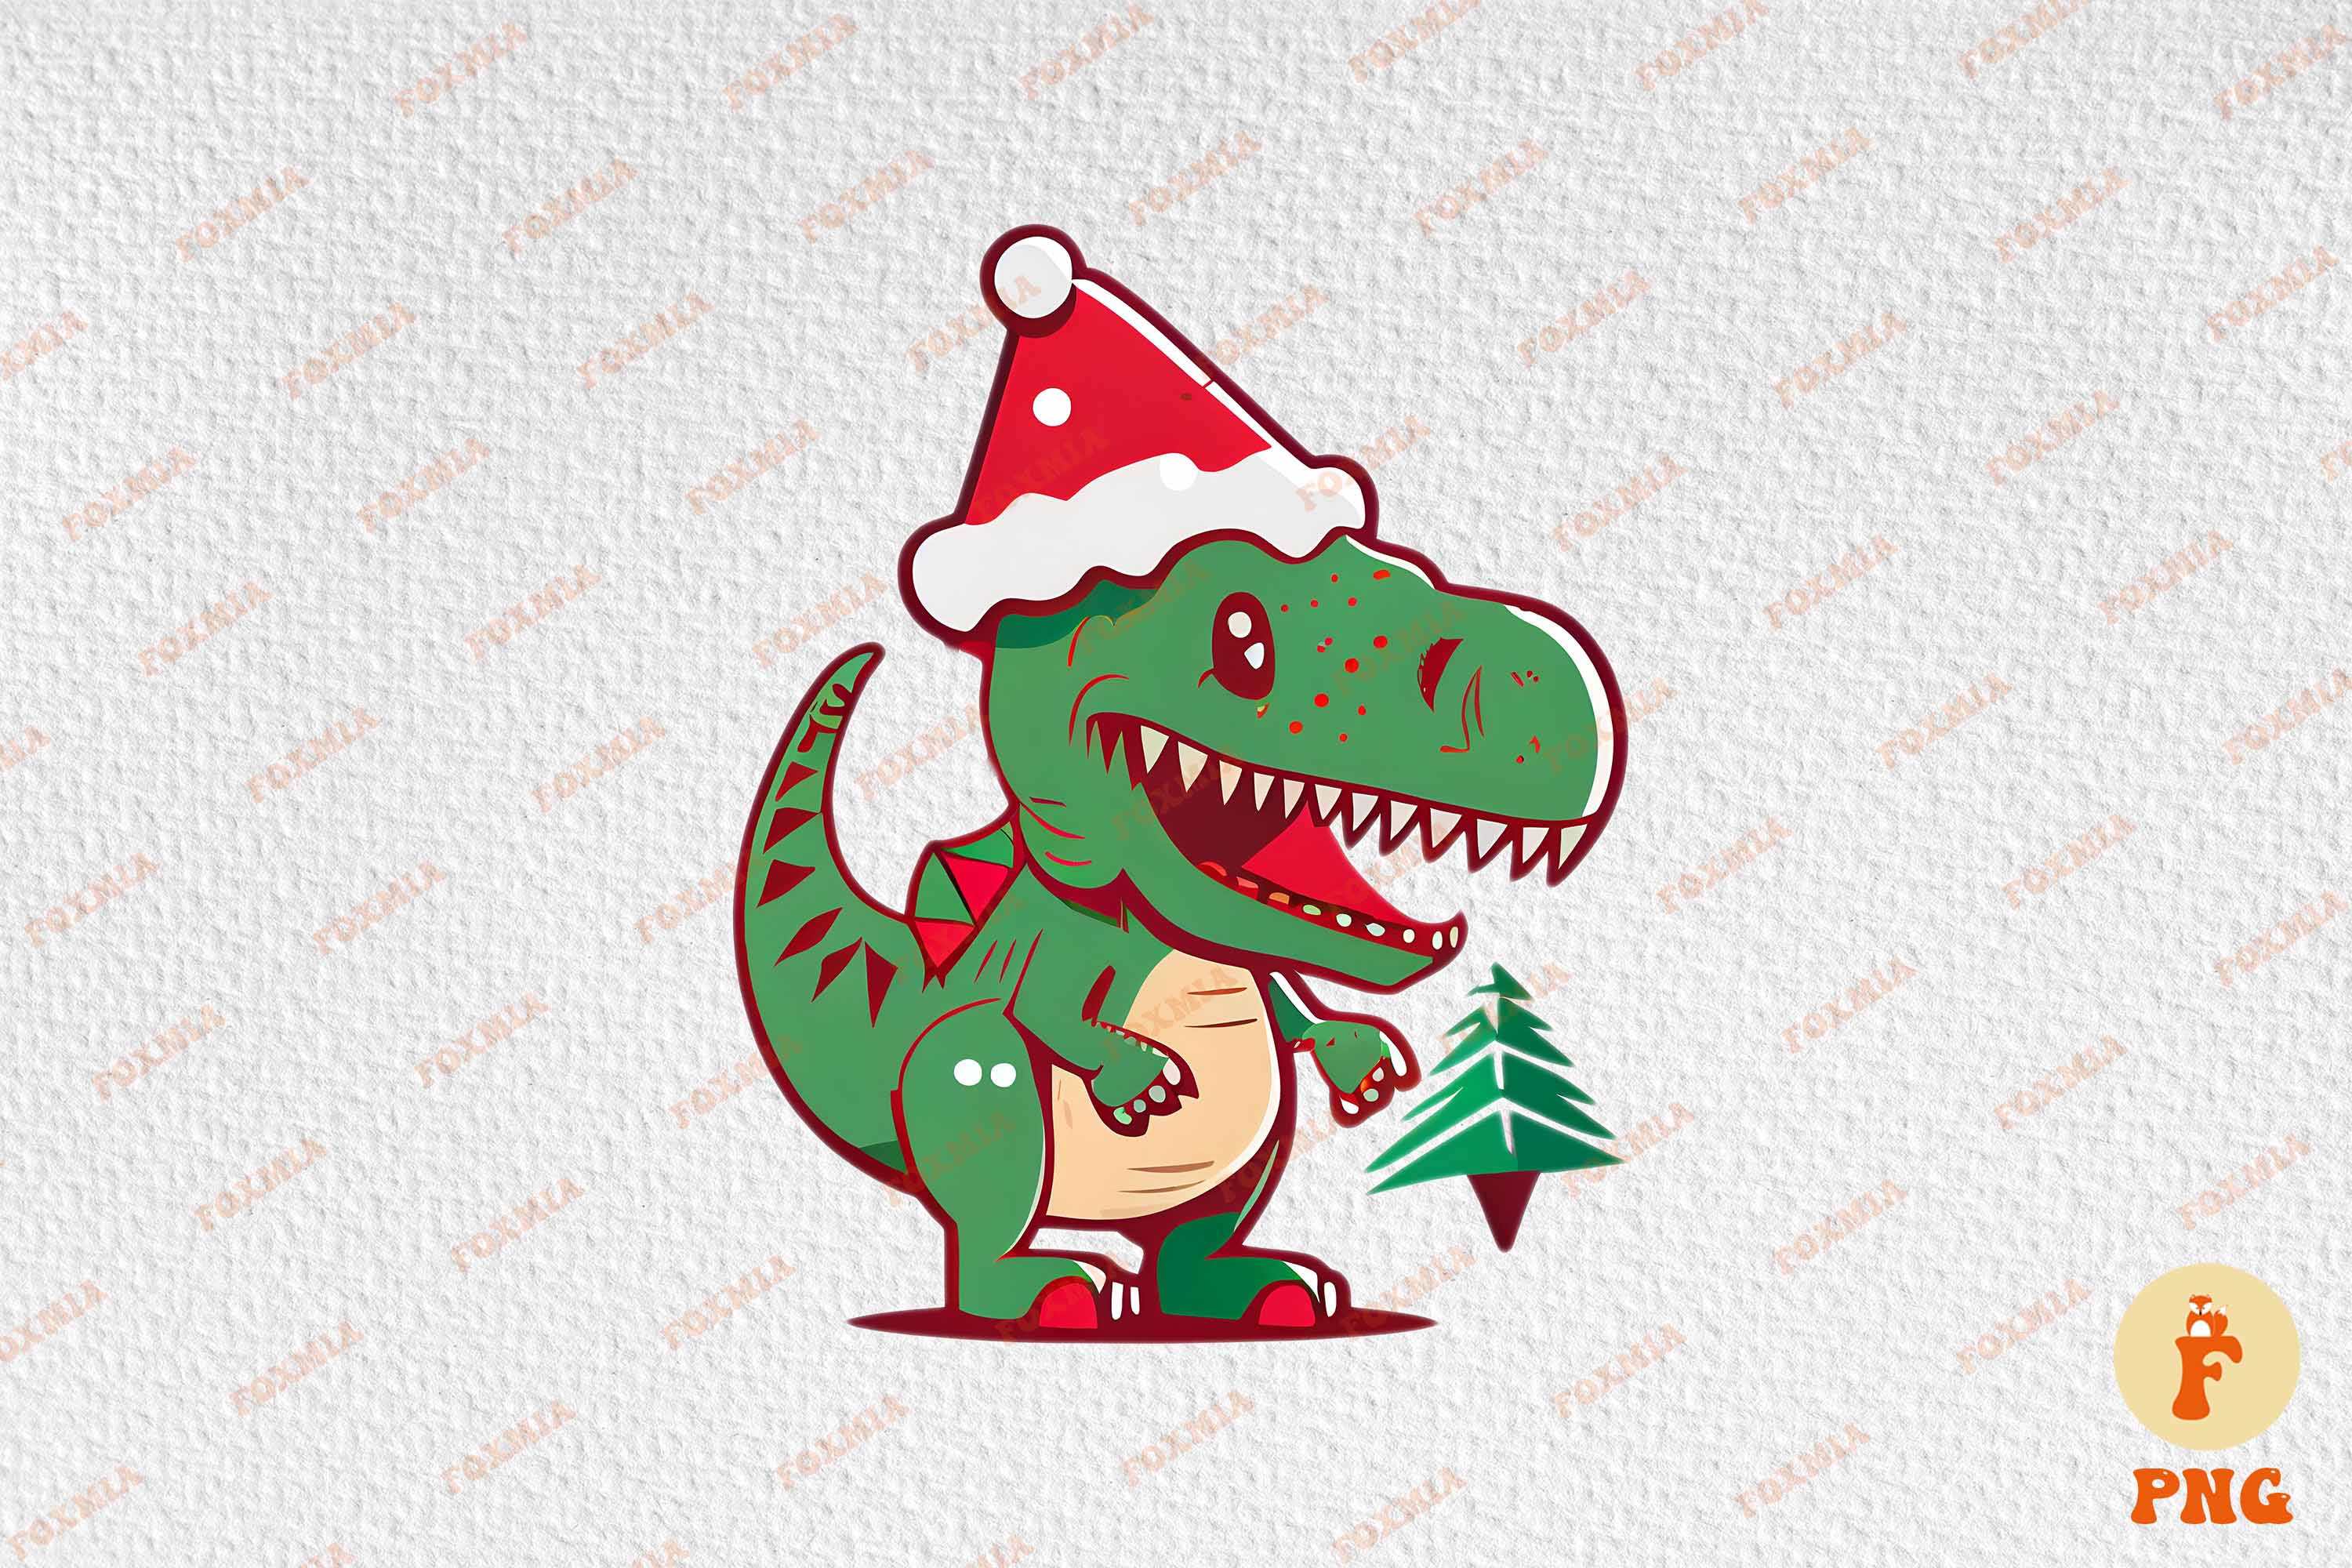 Unique image of a dinosaur wearing a Santa hat.